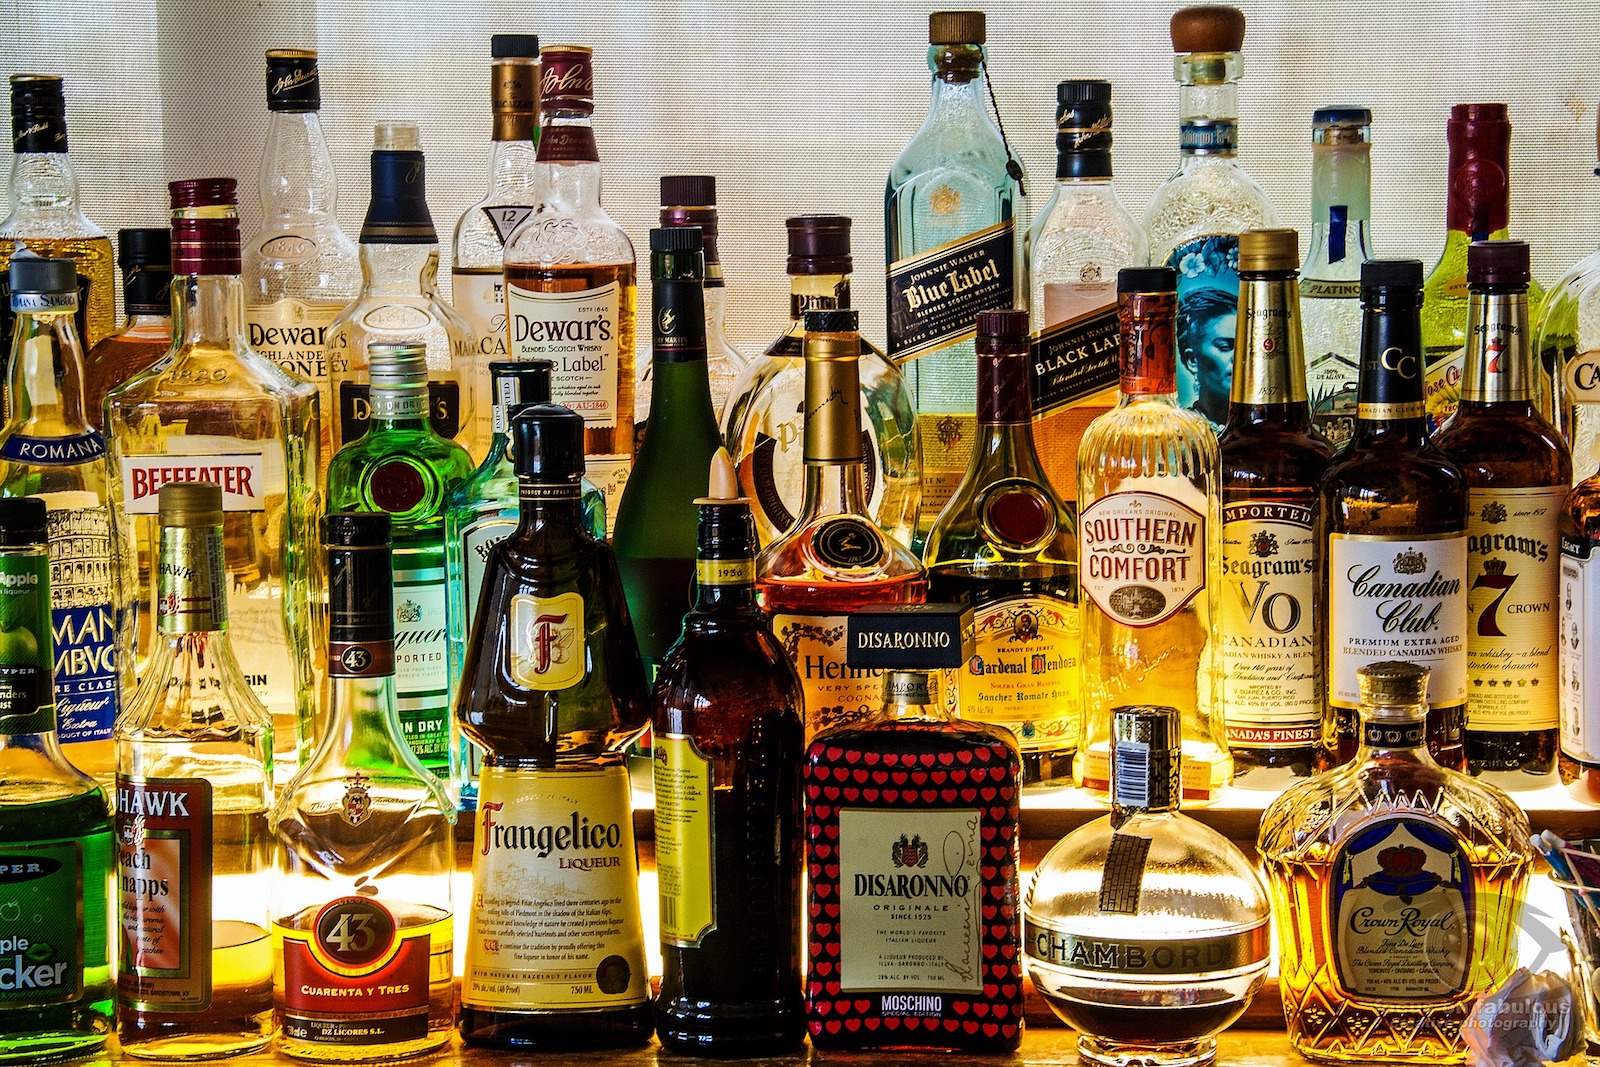 https://www.clutter.com/blog/wp-content/uploads/2018/02/27121635/liquor-bottles-backlit.jpg